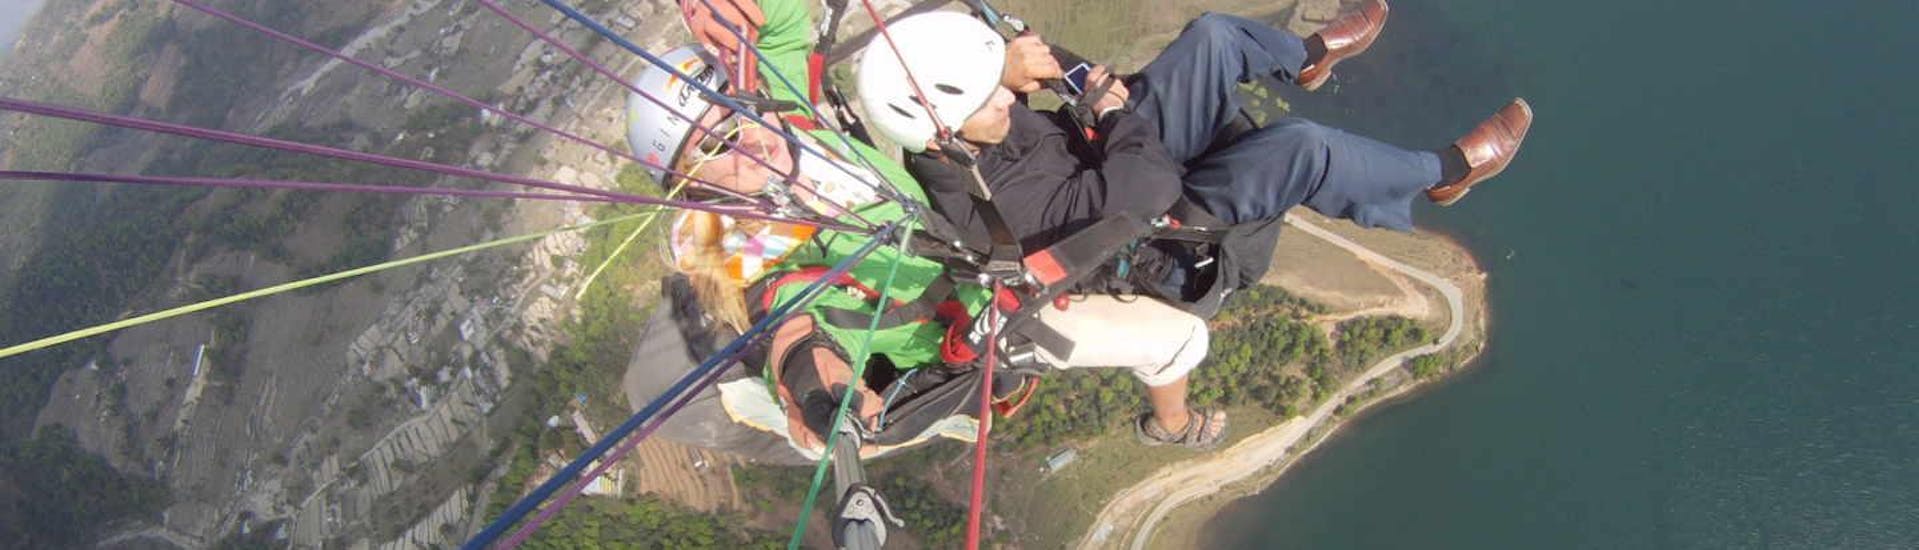 Thermisch tandem paragliding in Norma (vanaf 10 j.).